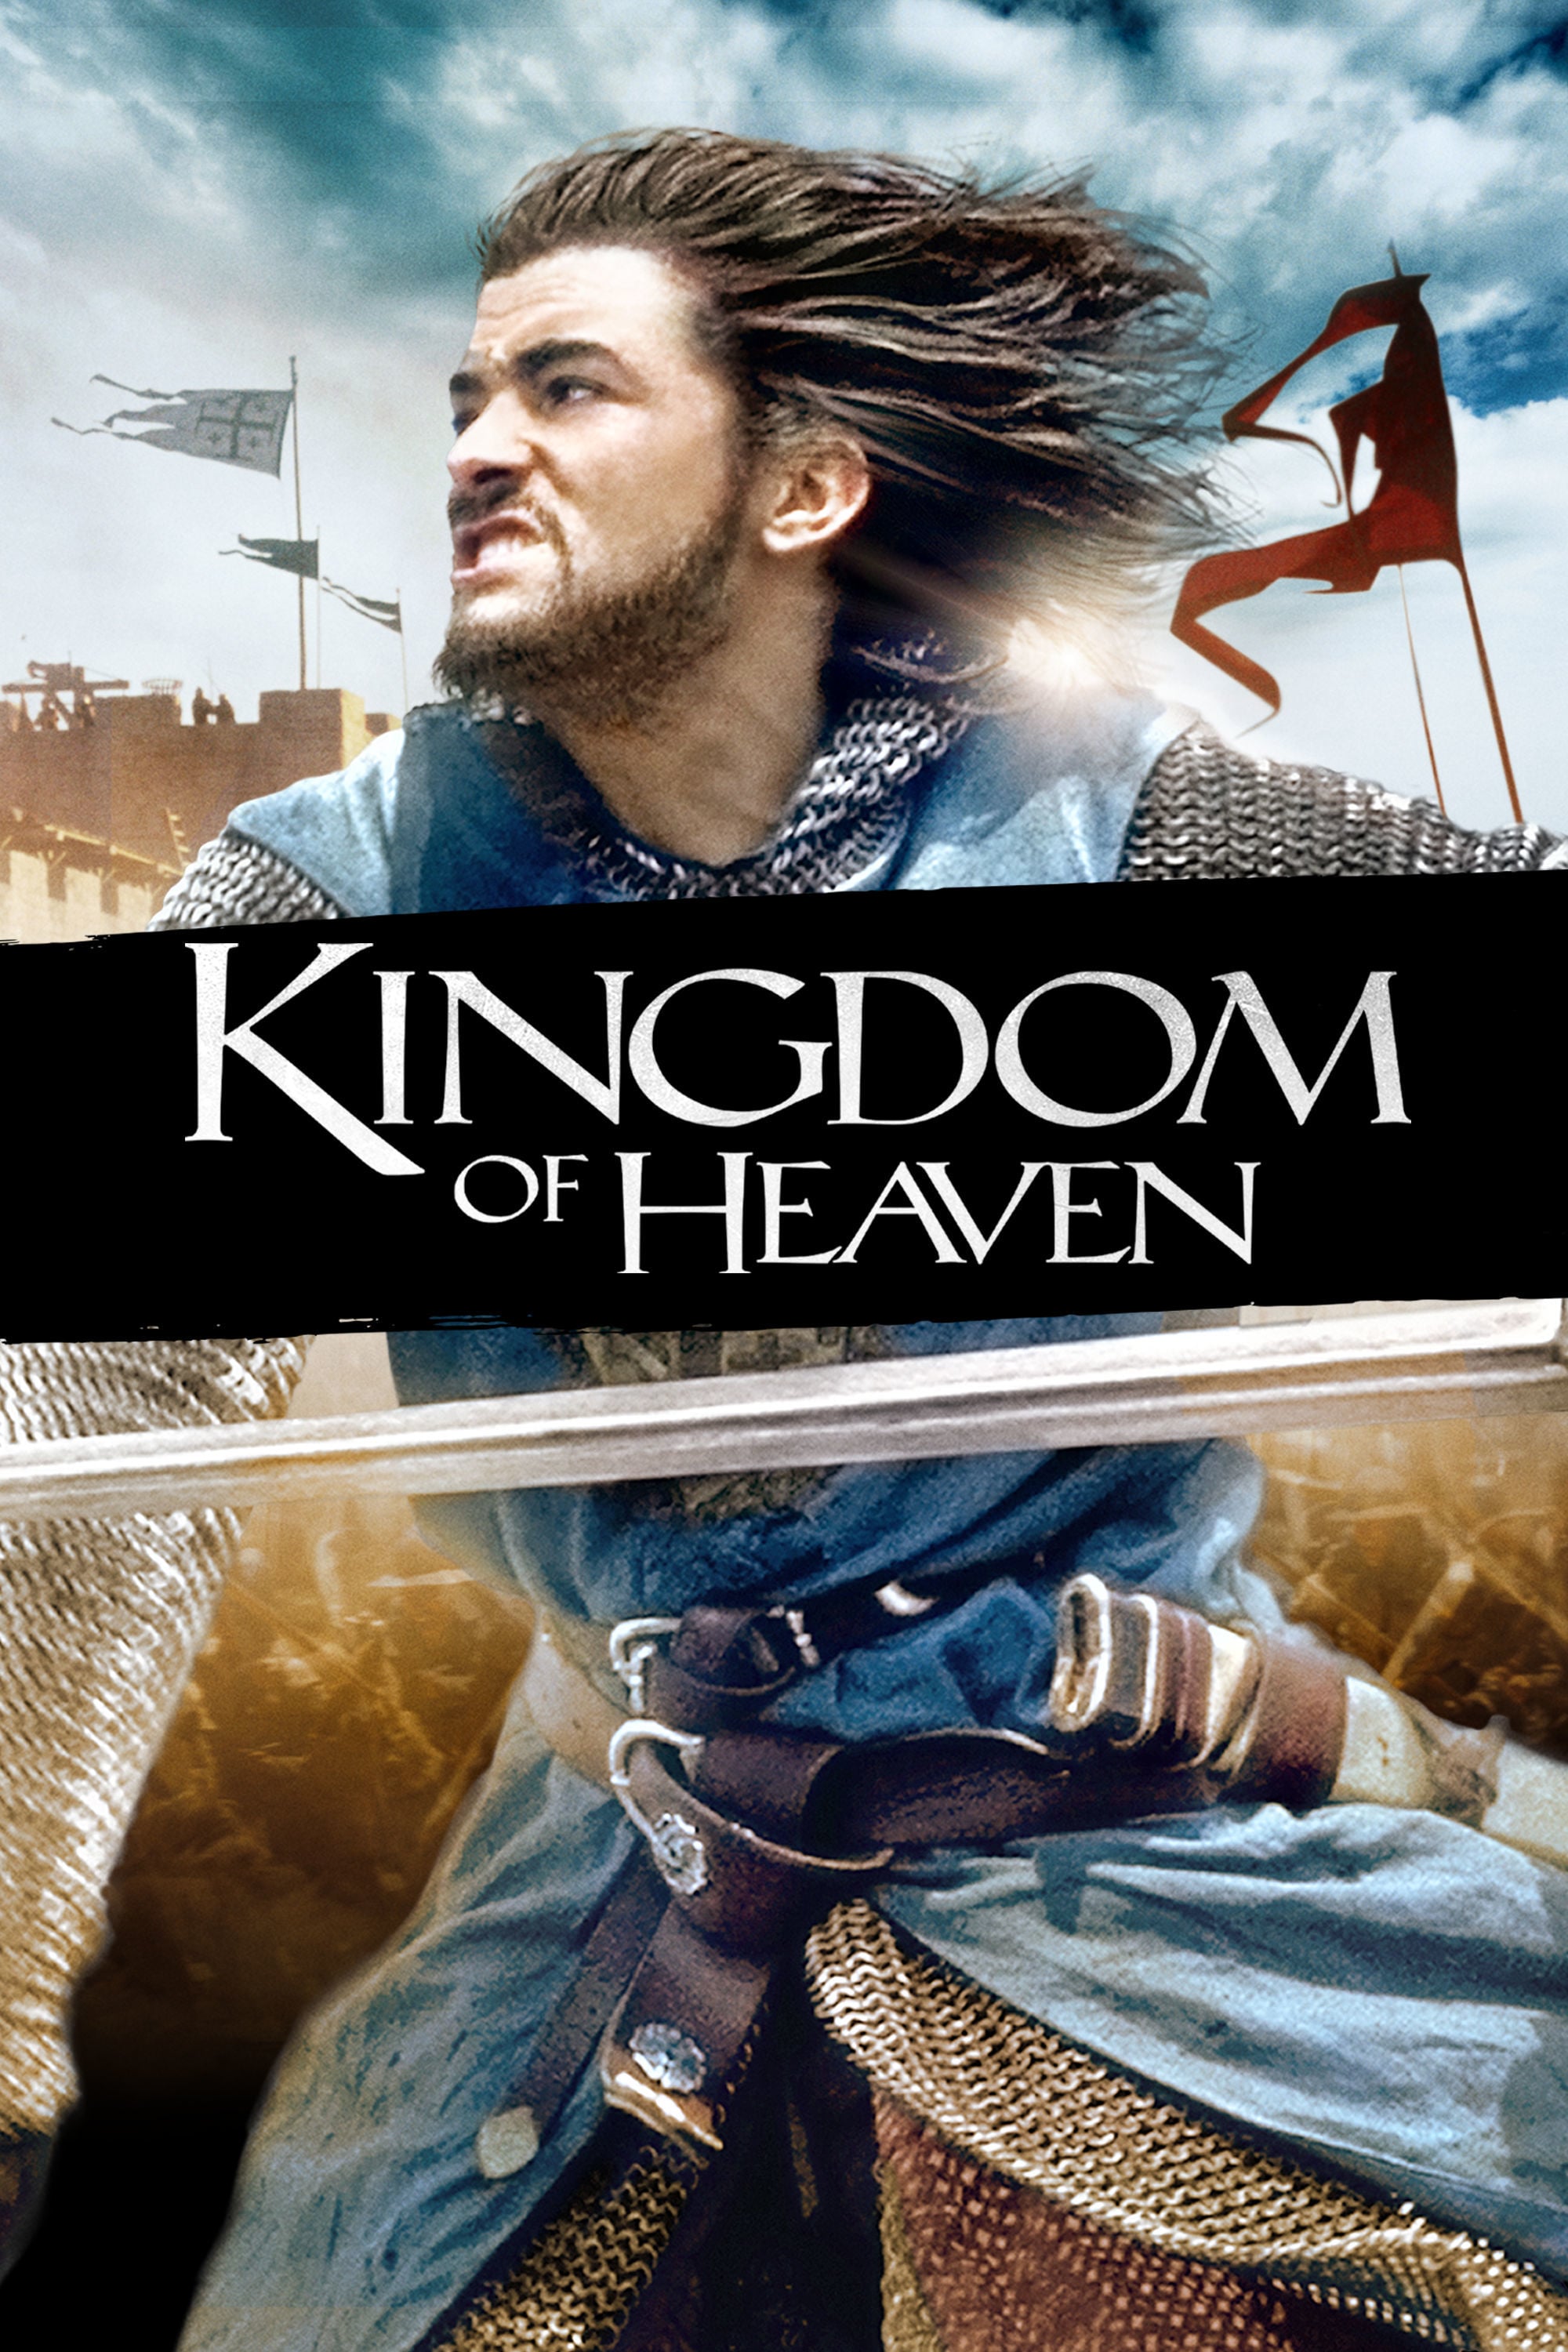 Kingdom of heaven. Царство небесное фильм Постер. Kingdom of Heaven 2005. Царство небесное 2005 poster. Царство небесное 2005 Постер.